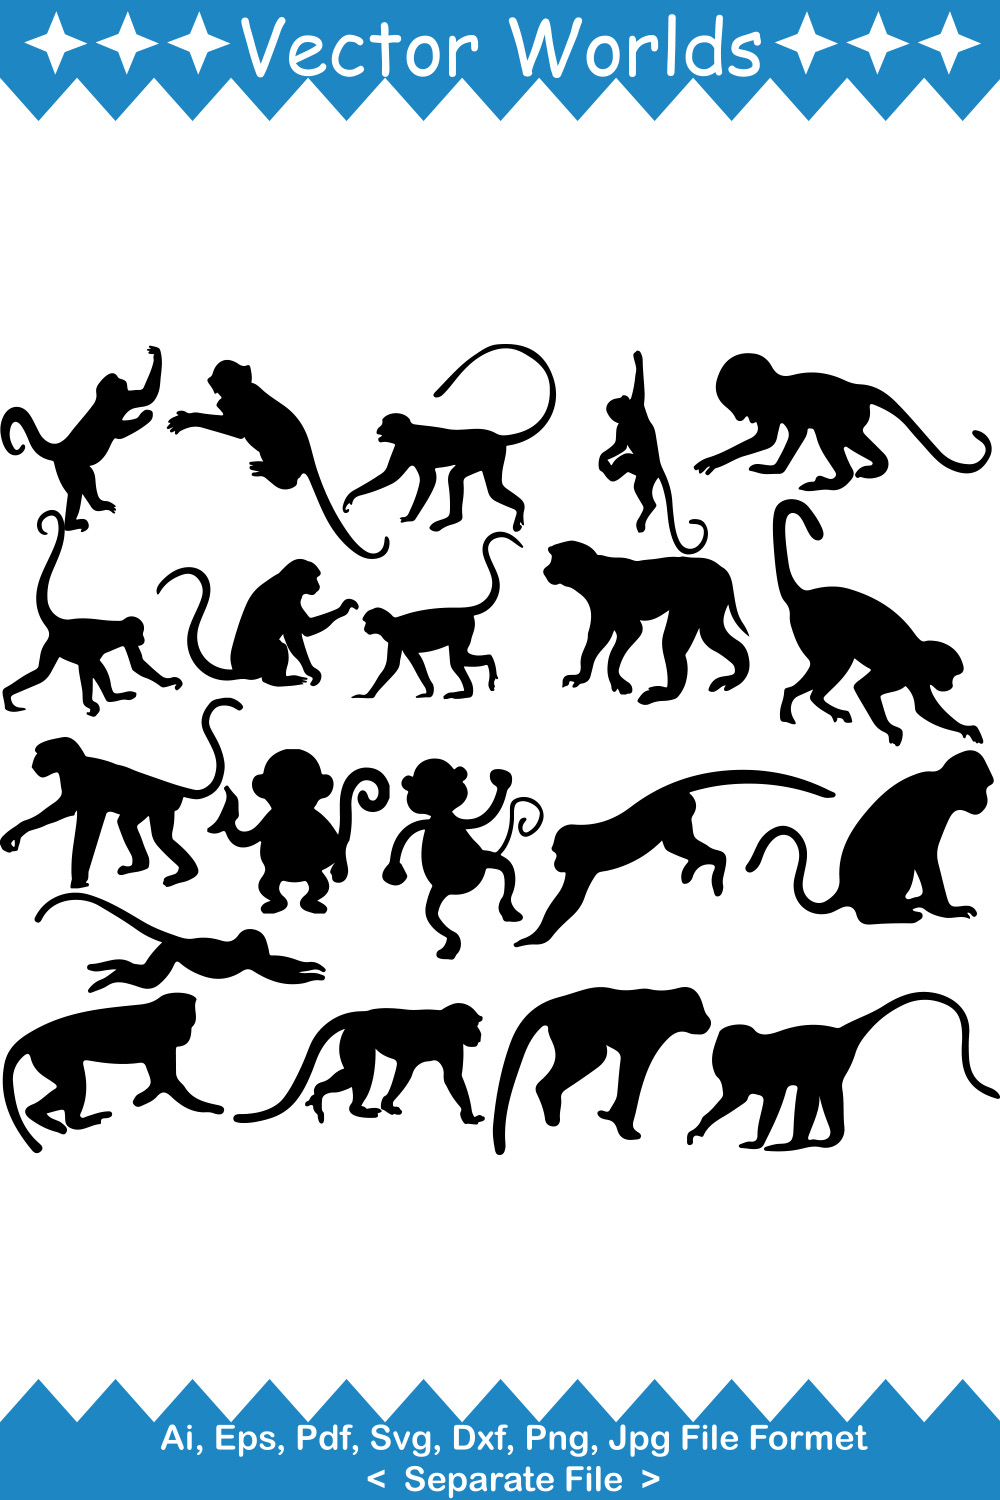 Set of monkey silhouettes on a white background.